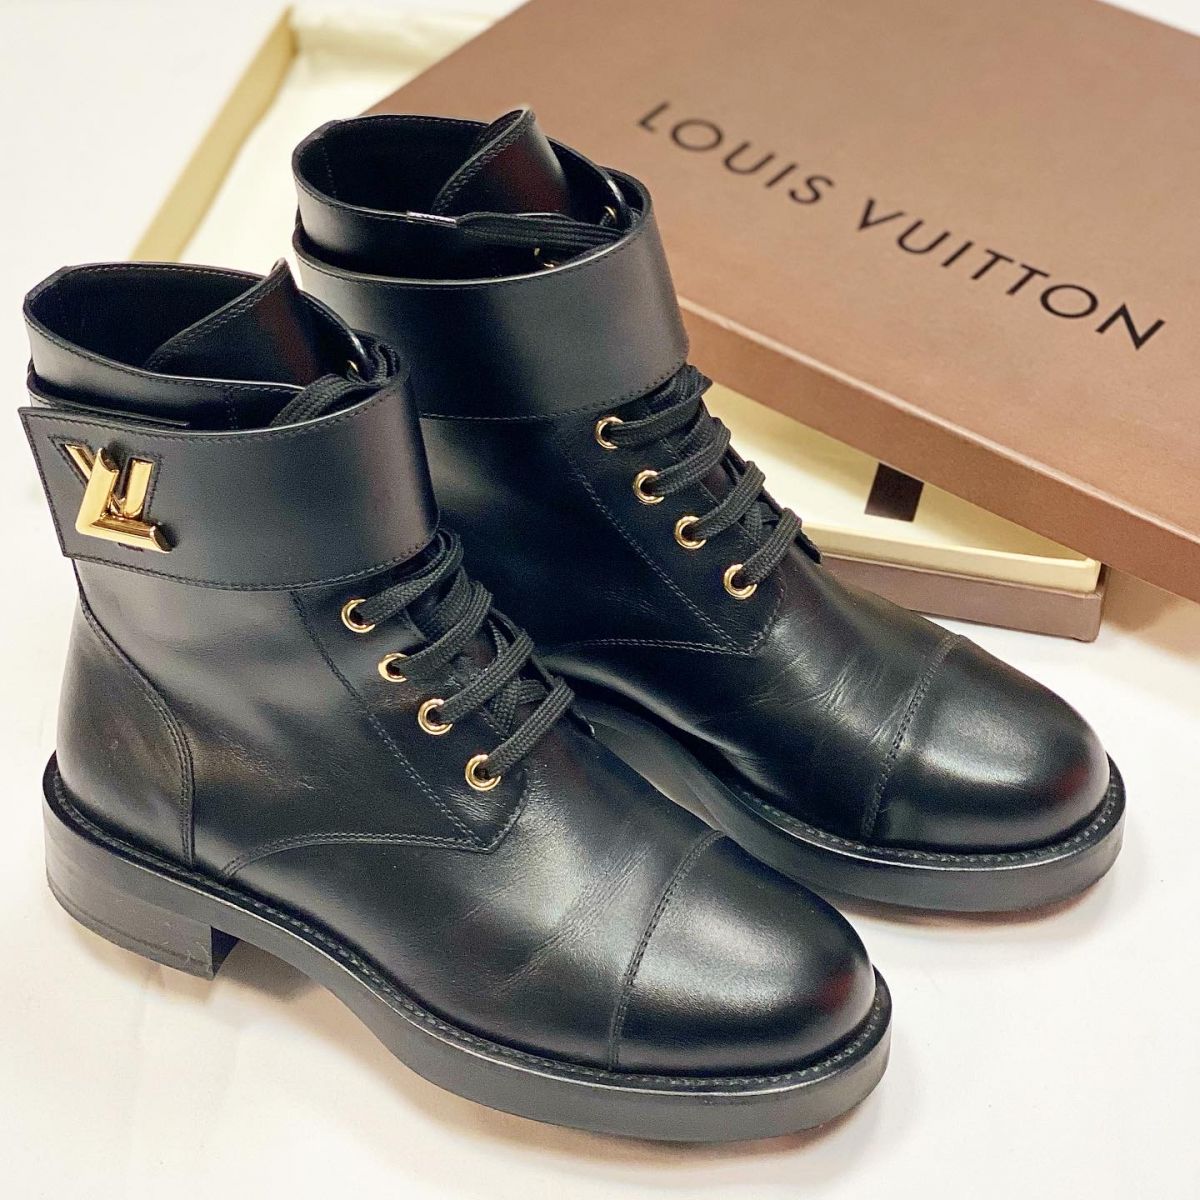 Ботинки Louis Vuitton размер 37.5 цена 46 155 руб